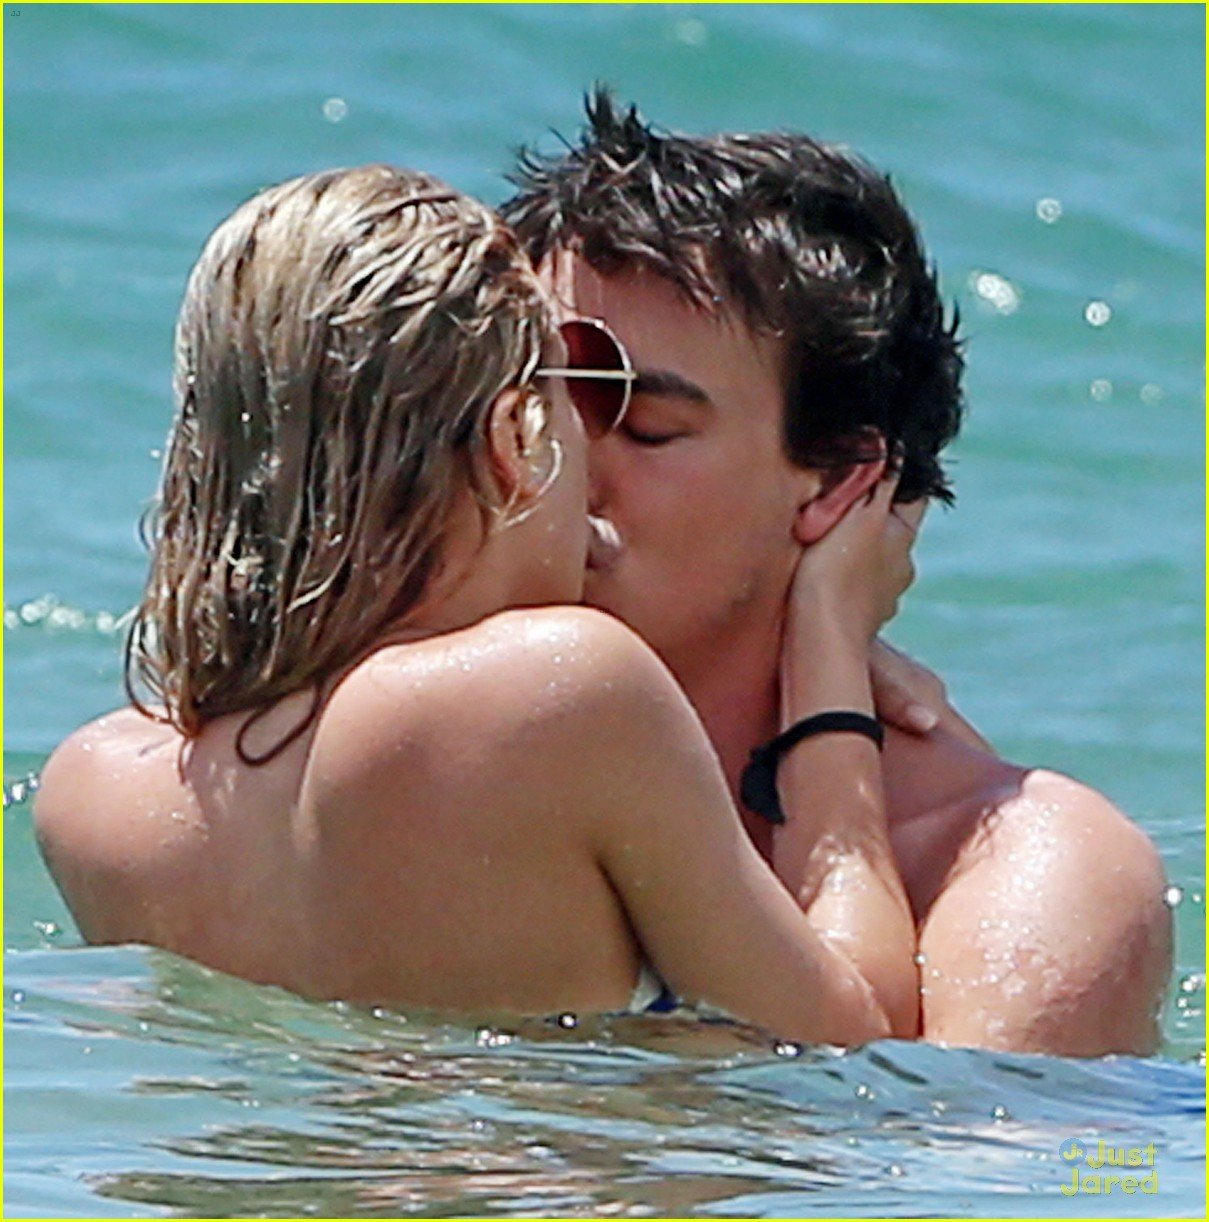 tyler blackburn kiss girlfriend beach maui vacation 06